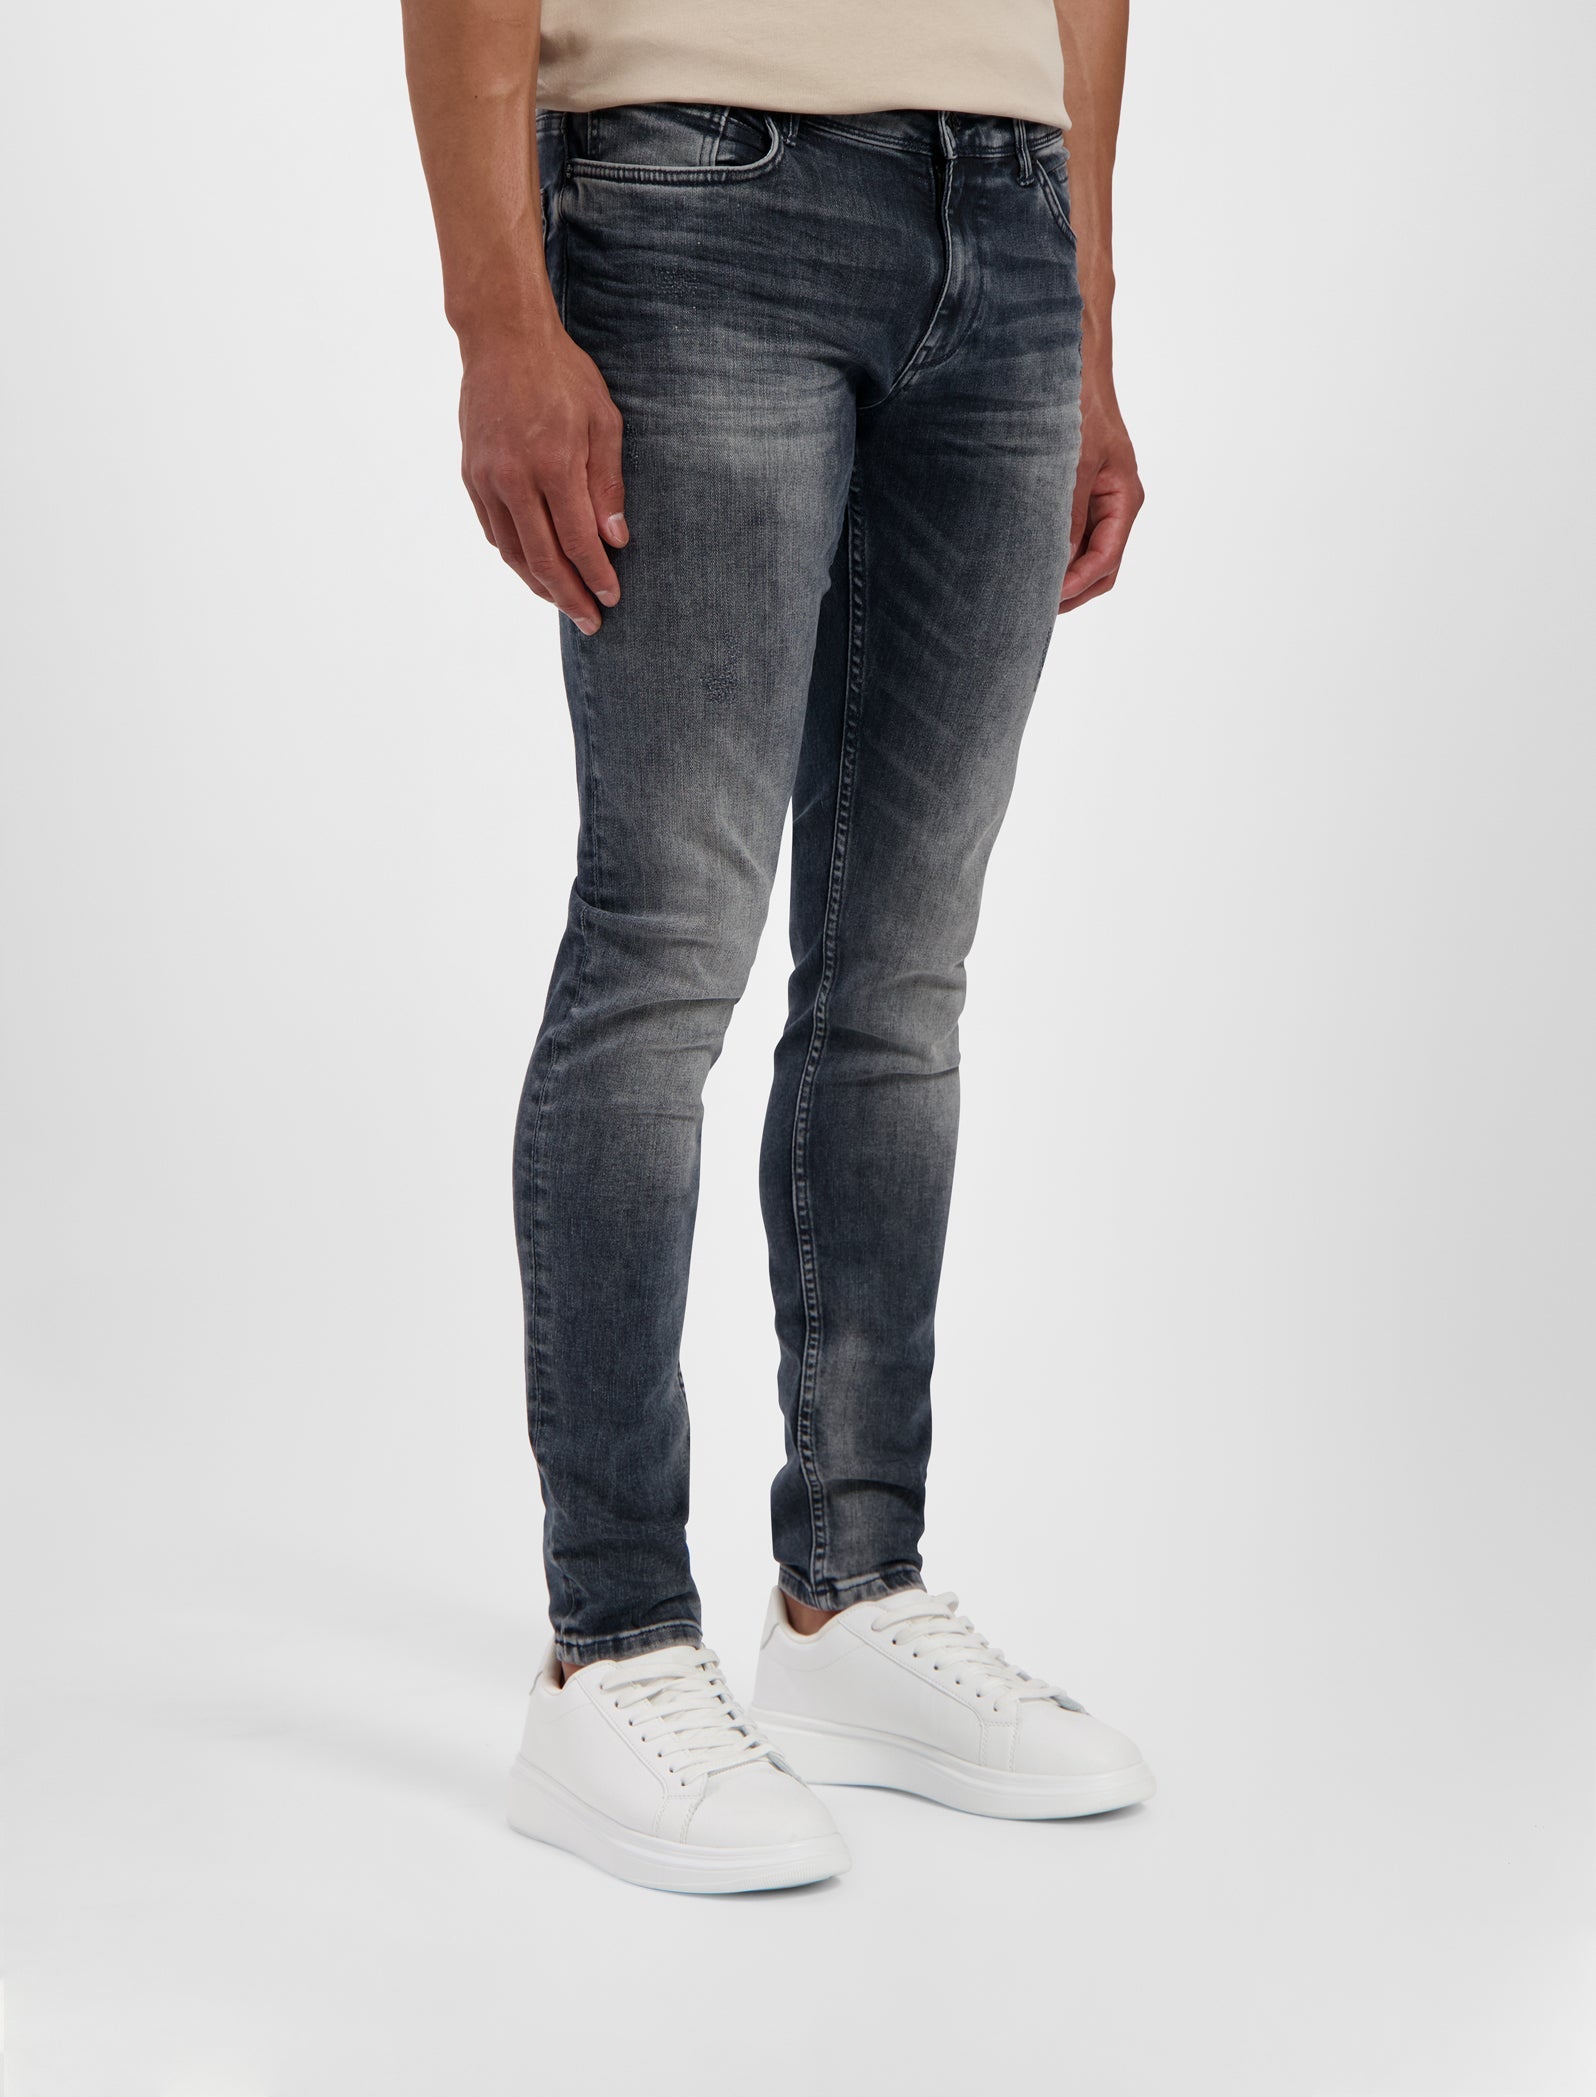 Purewhite Jeans The Jone W1160